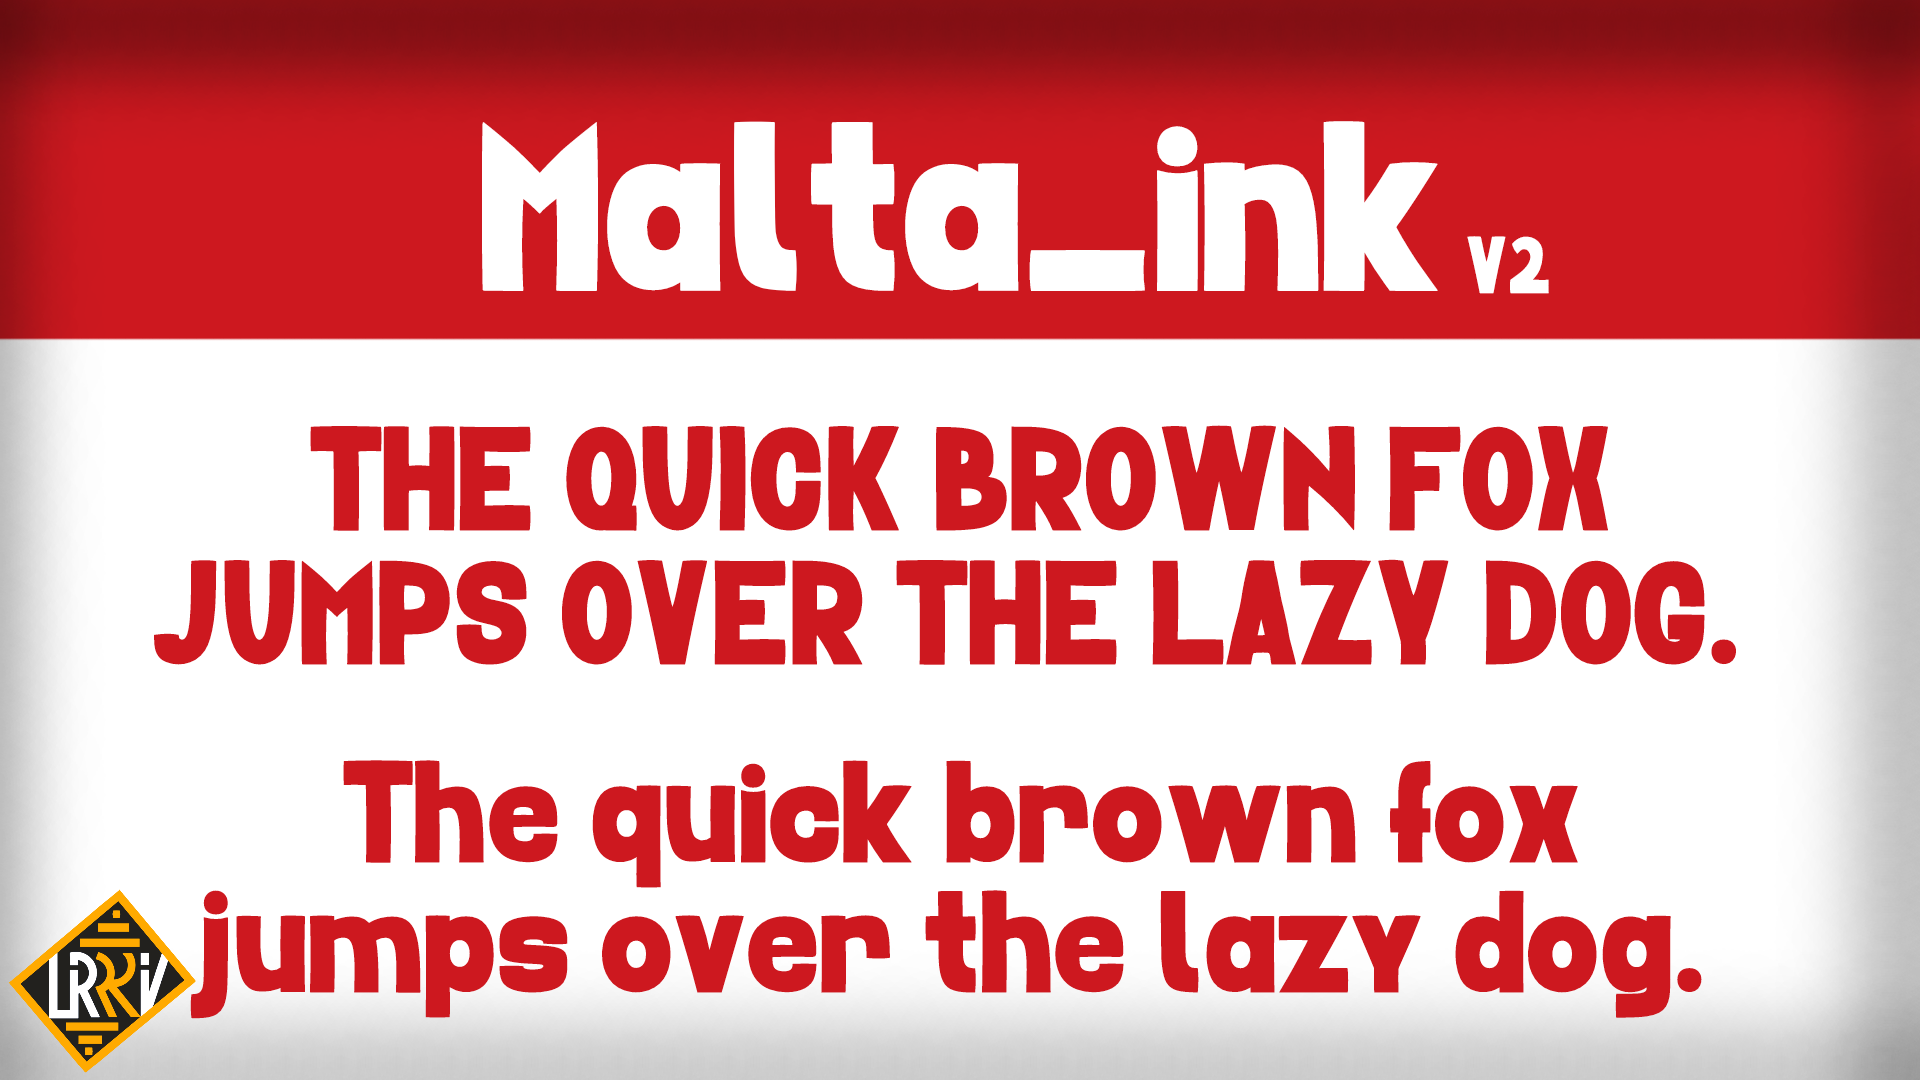 Malta_INK